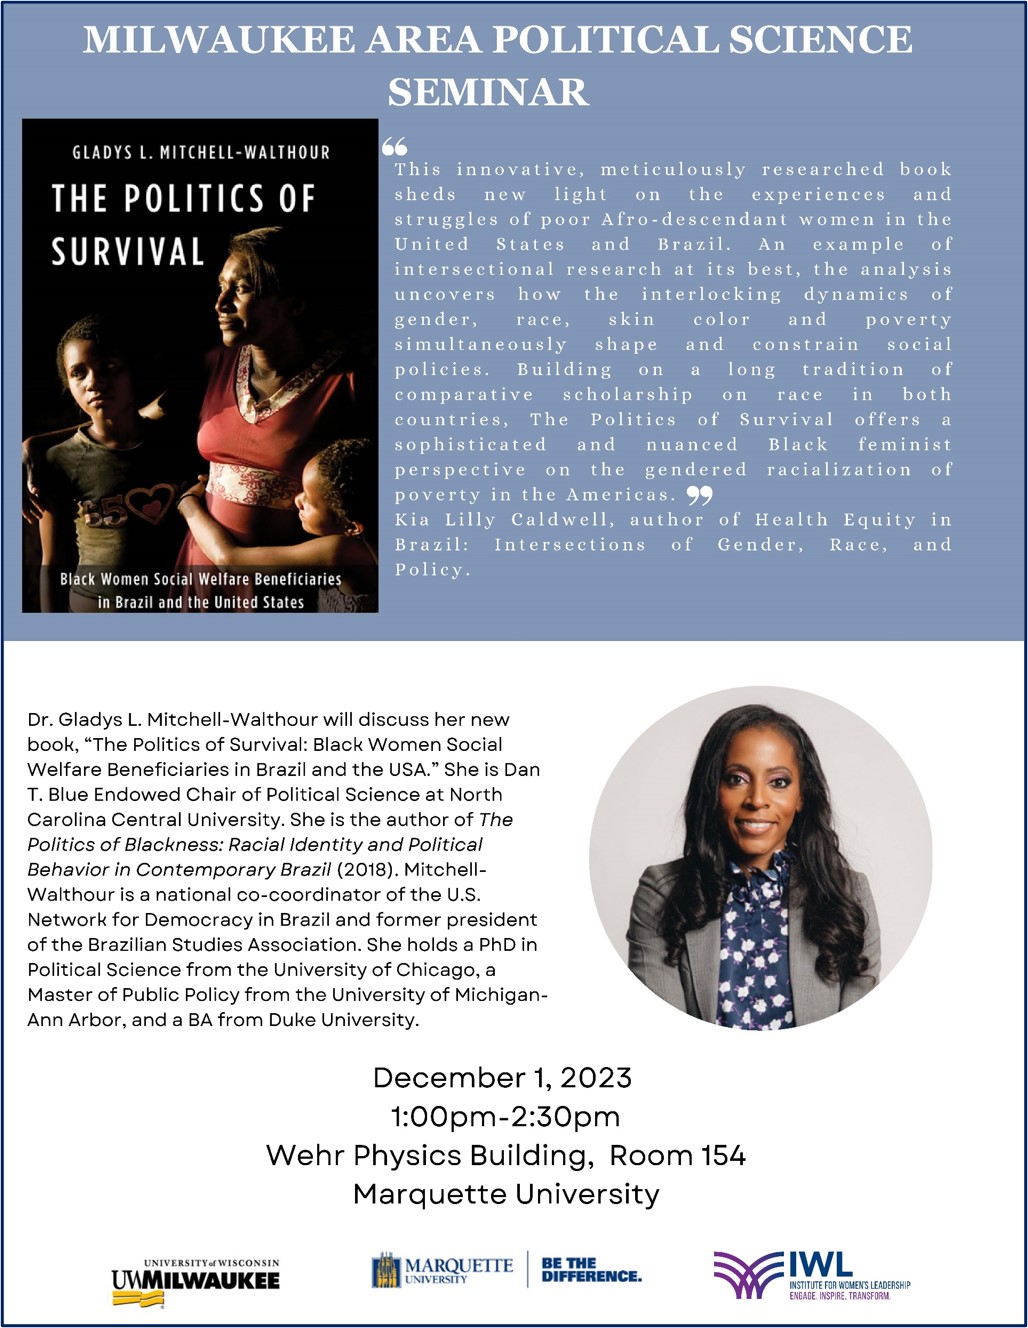 Milwaukee Area Political Science Seminar flyer